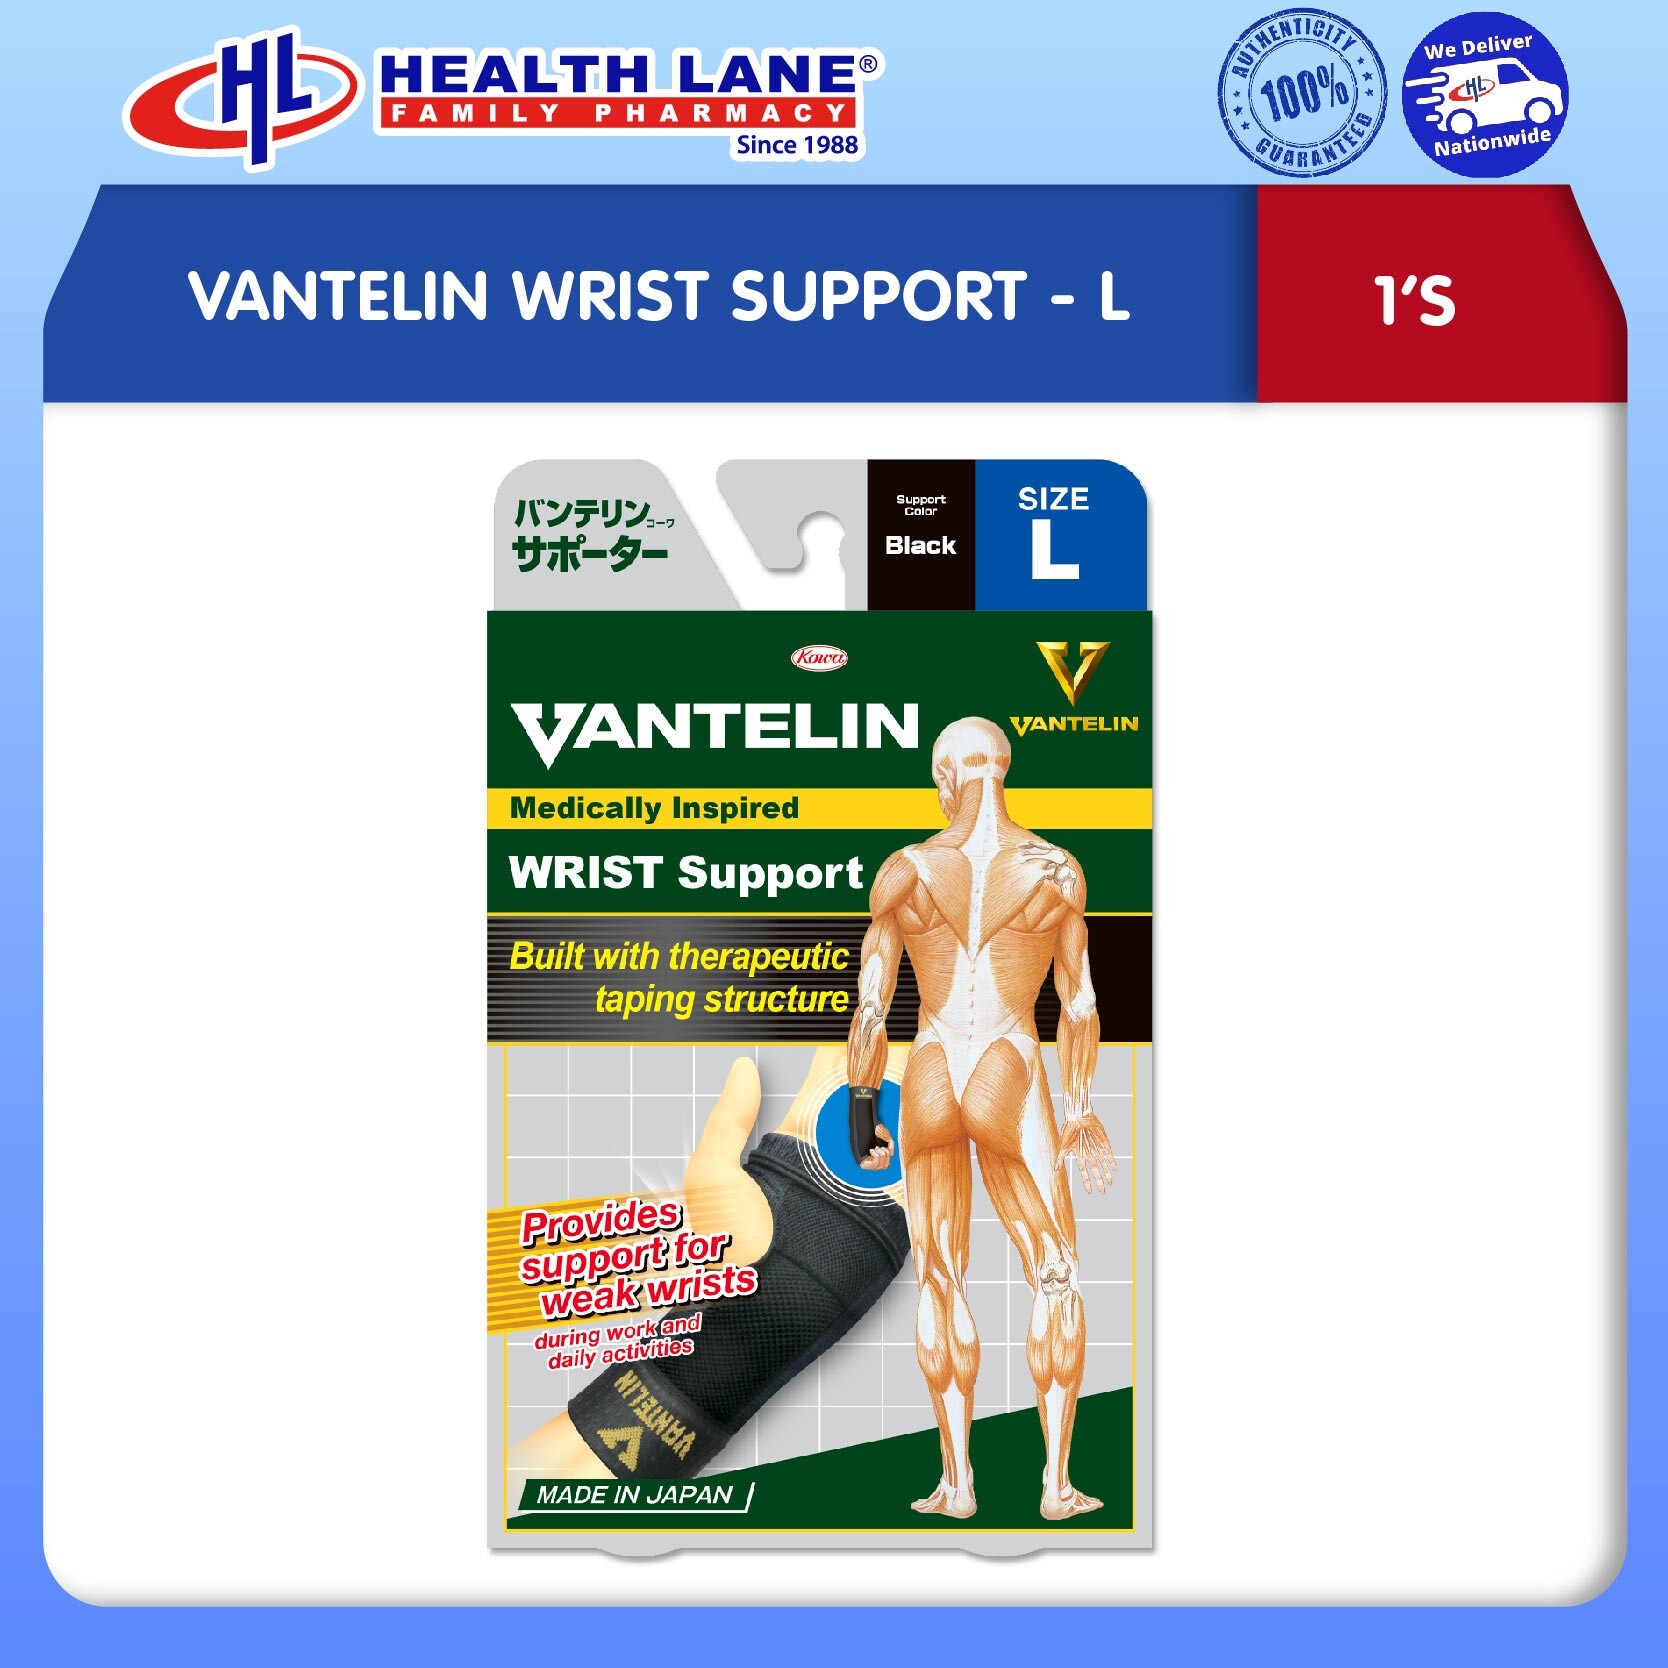 VANTELIN WRIST SUPPORT - (L)